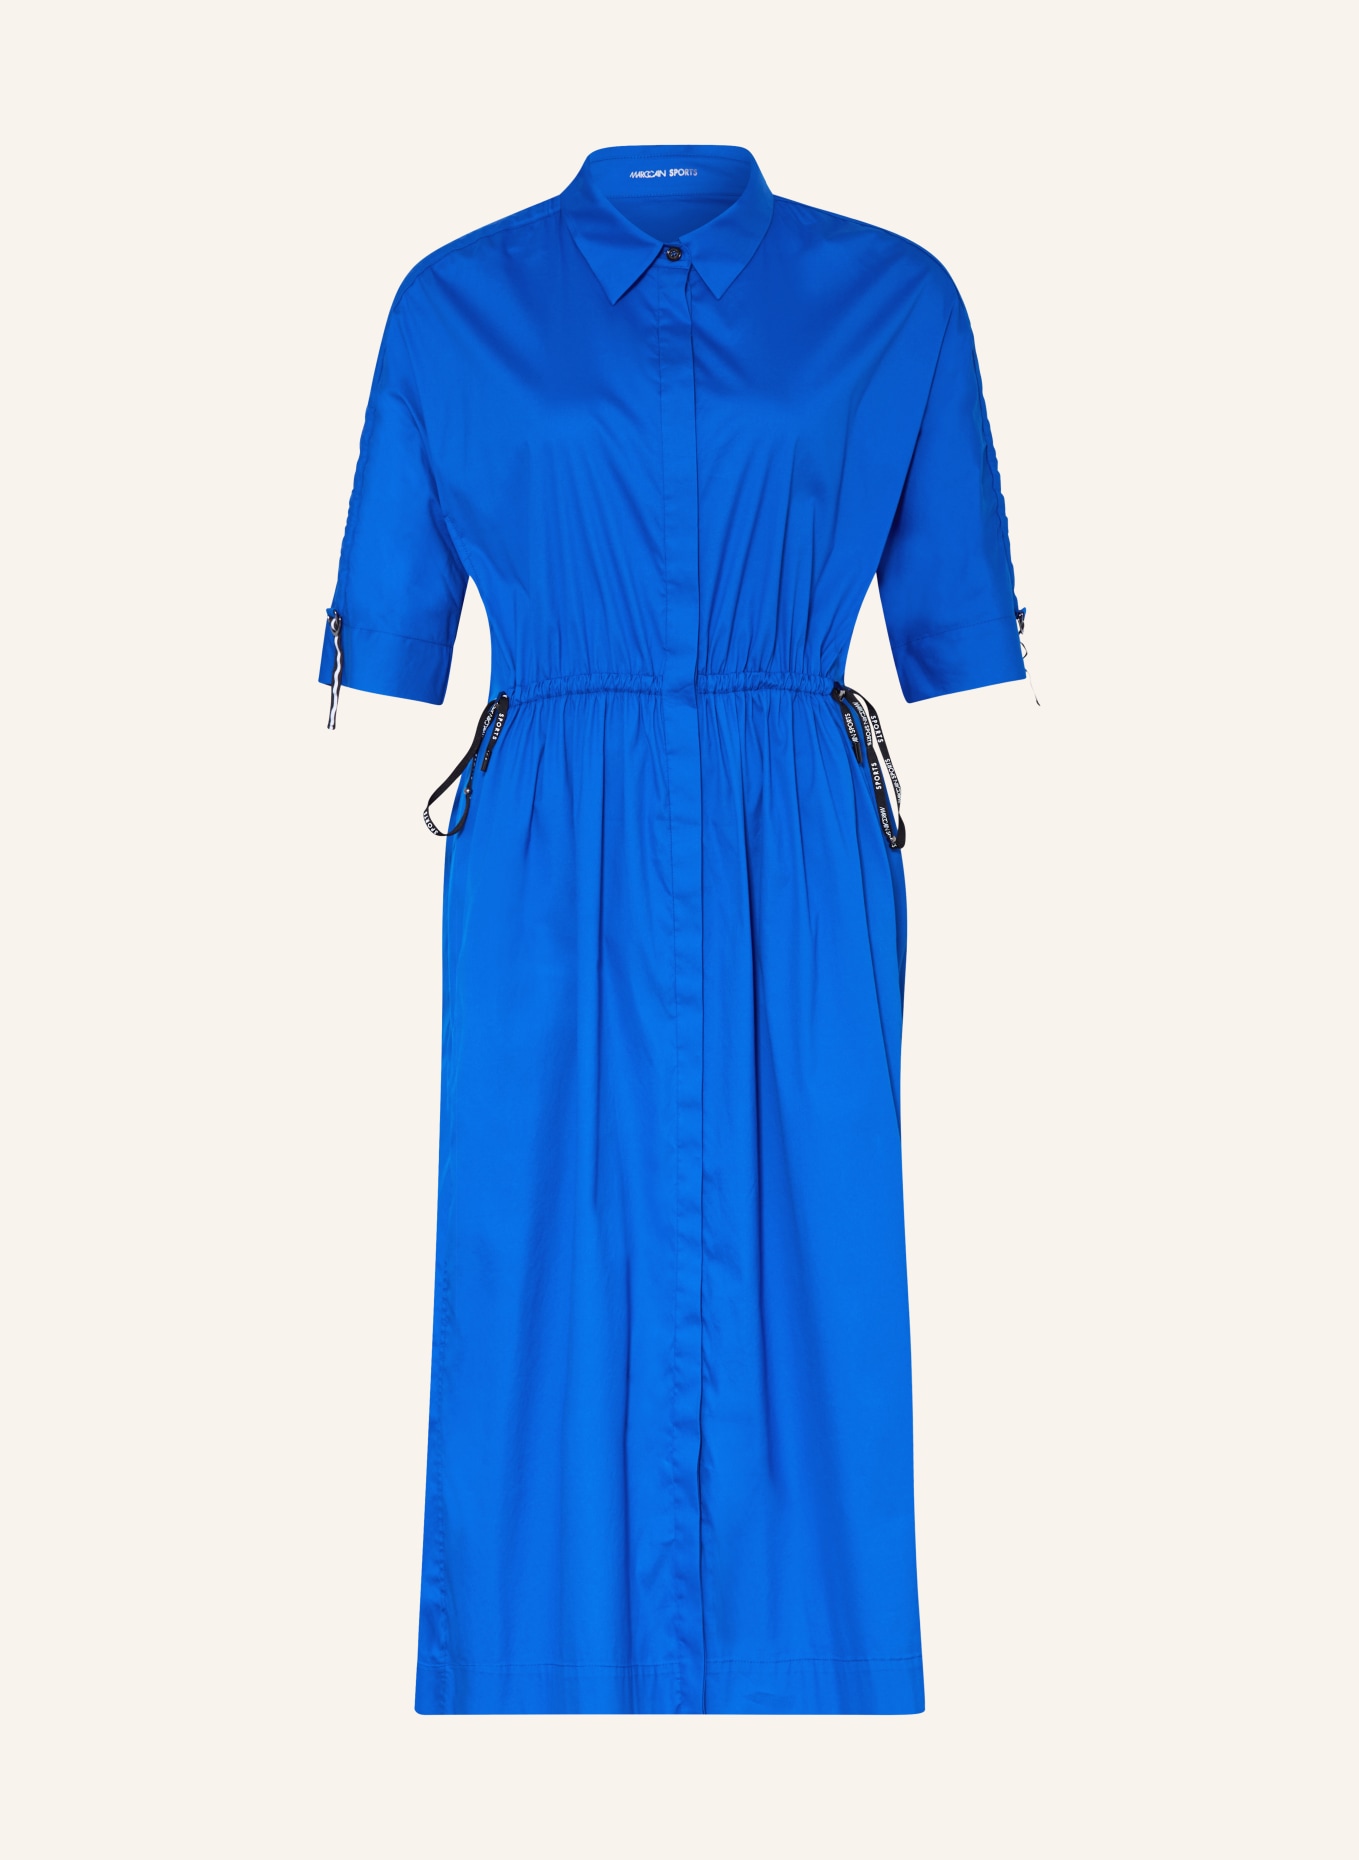 MARC CAIN Hemdblusenkleid, Farbe: 365 bright royal blue (Bild 1)